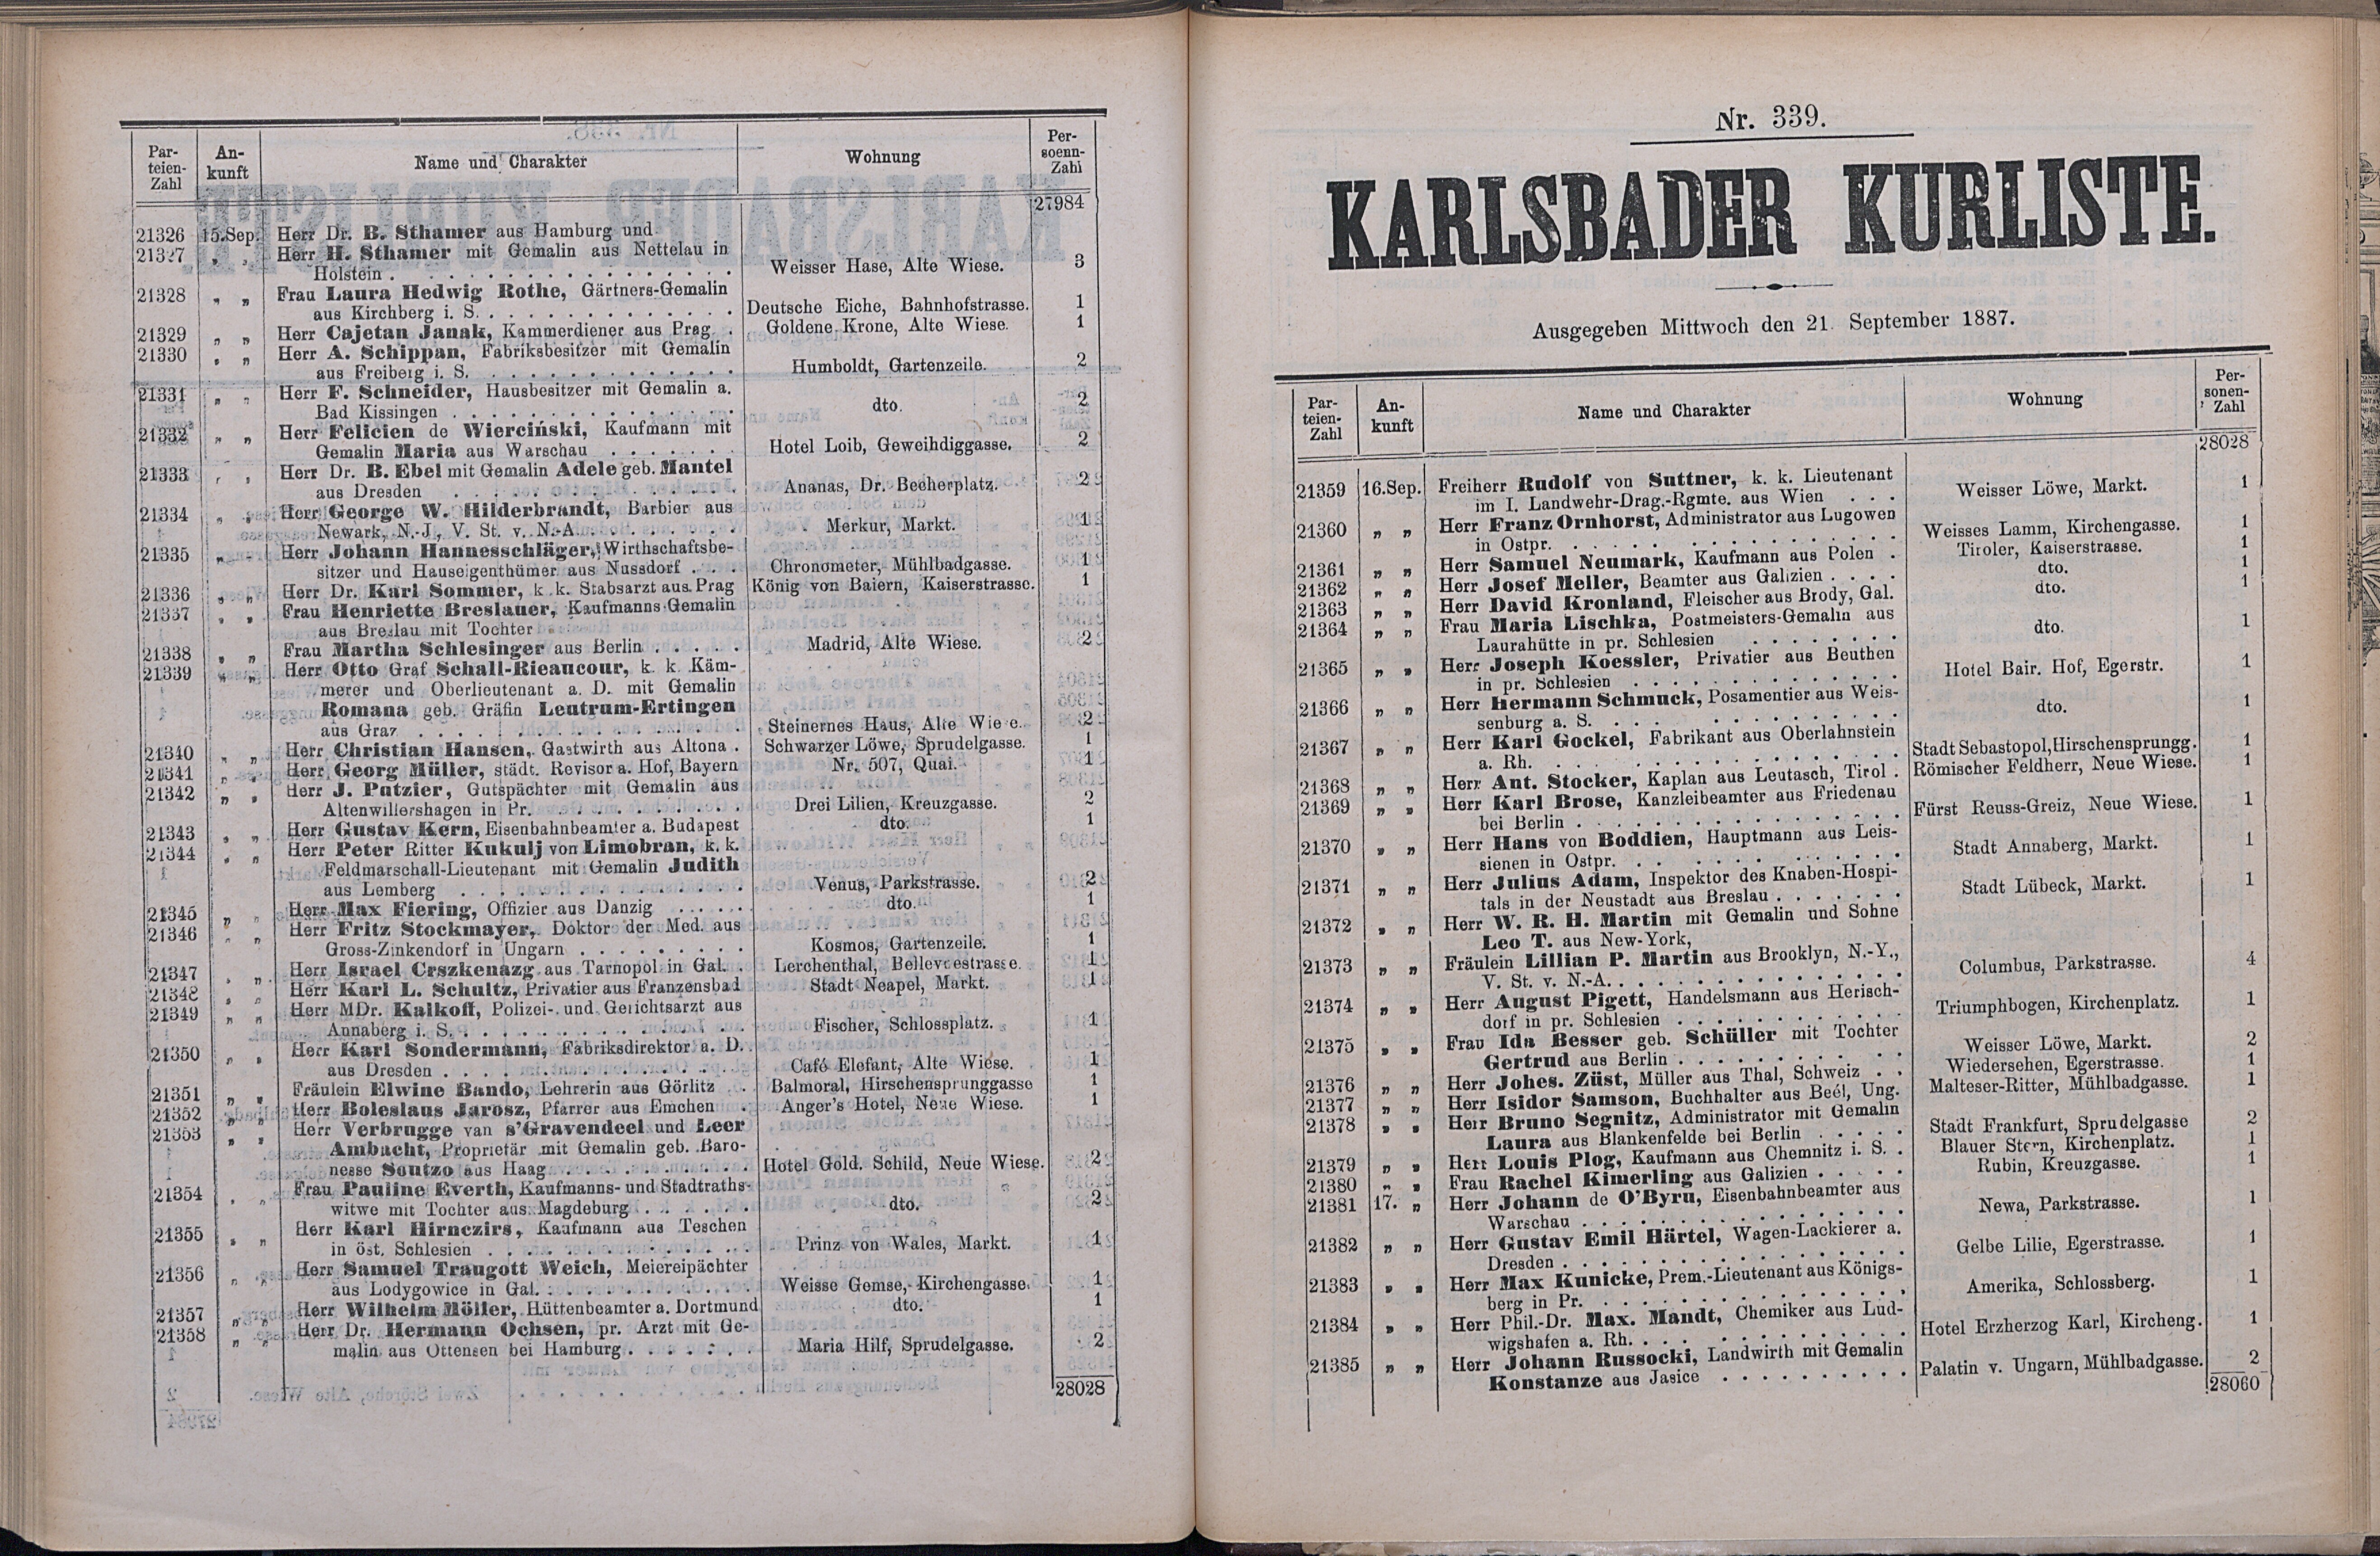 393. soap-kv_knihovna_karlsbader-kurliste-1887_3940